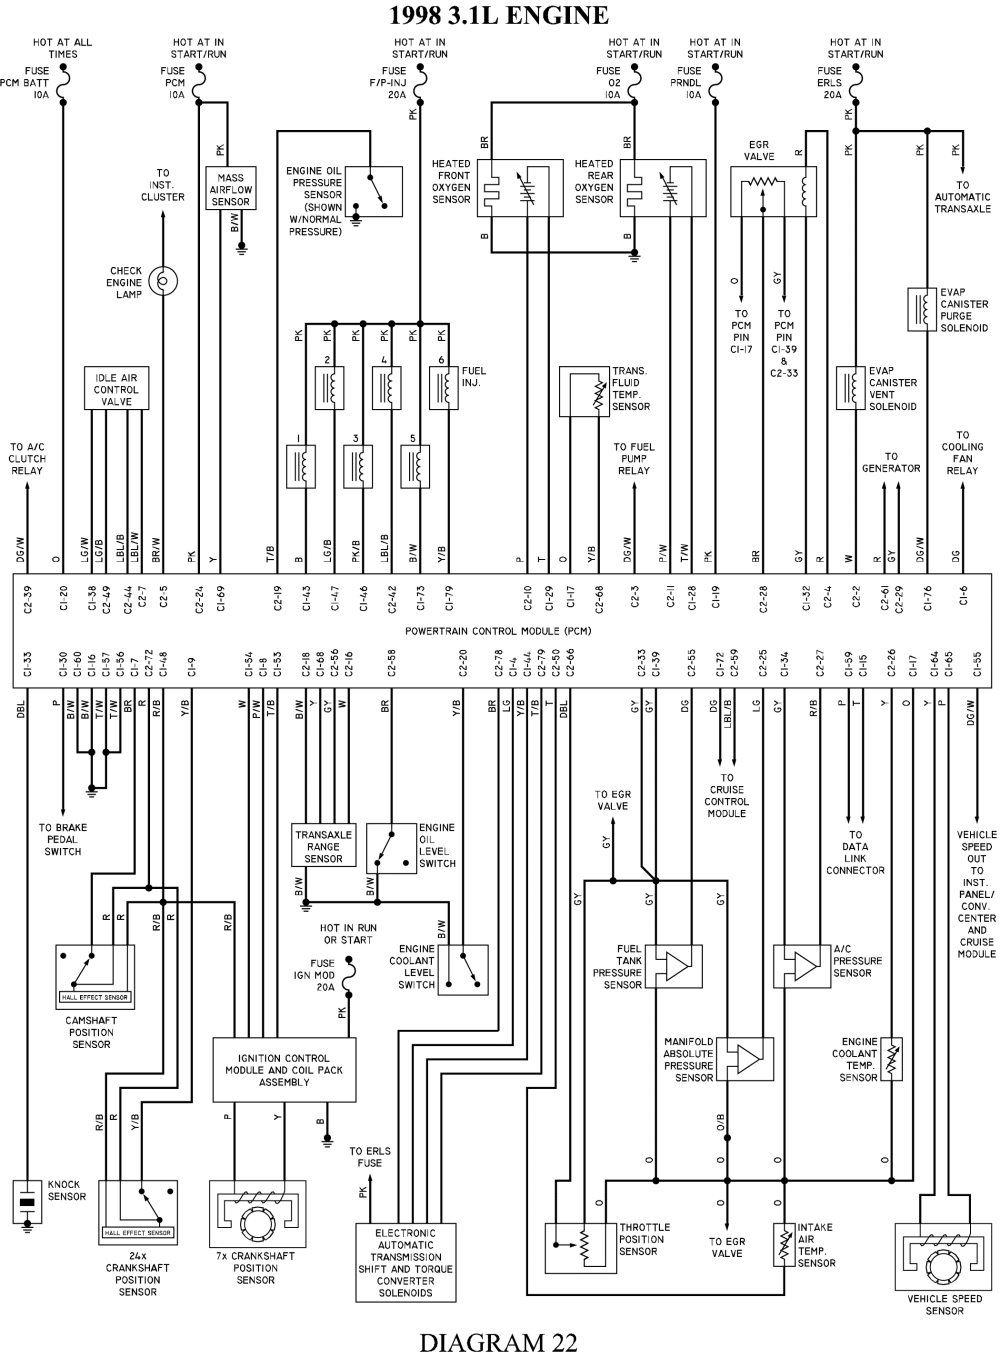 95 Grand Am Alternator Wiring Diagram - Wiring Diagram Networks